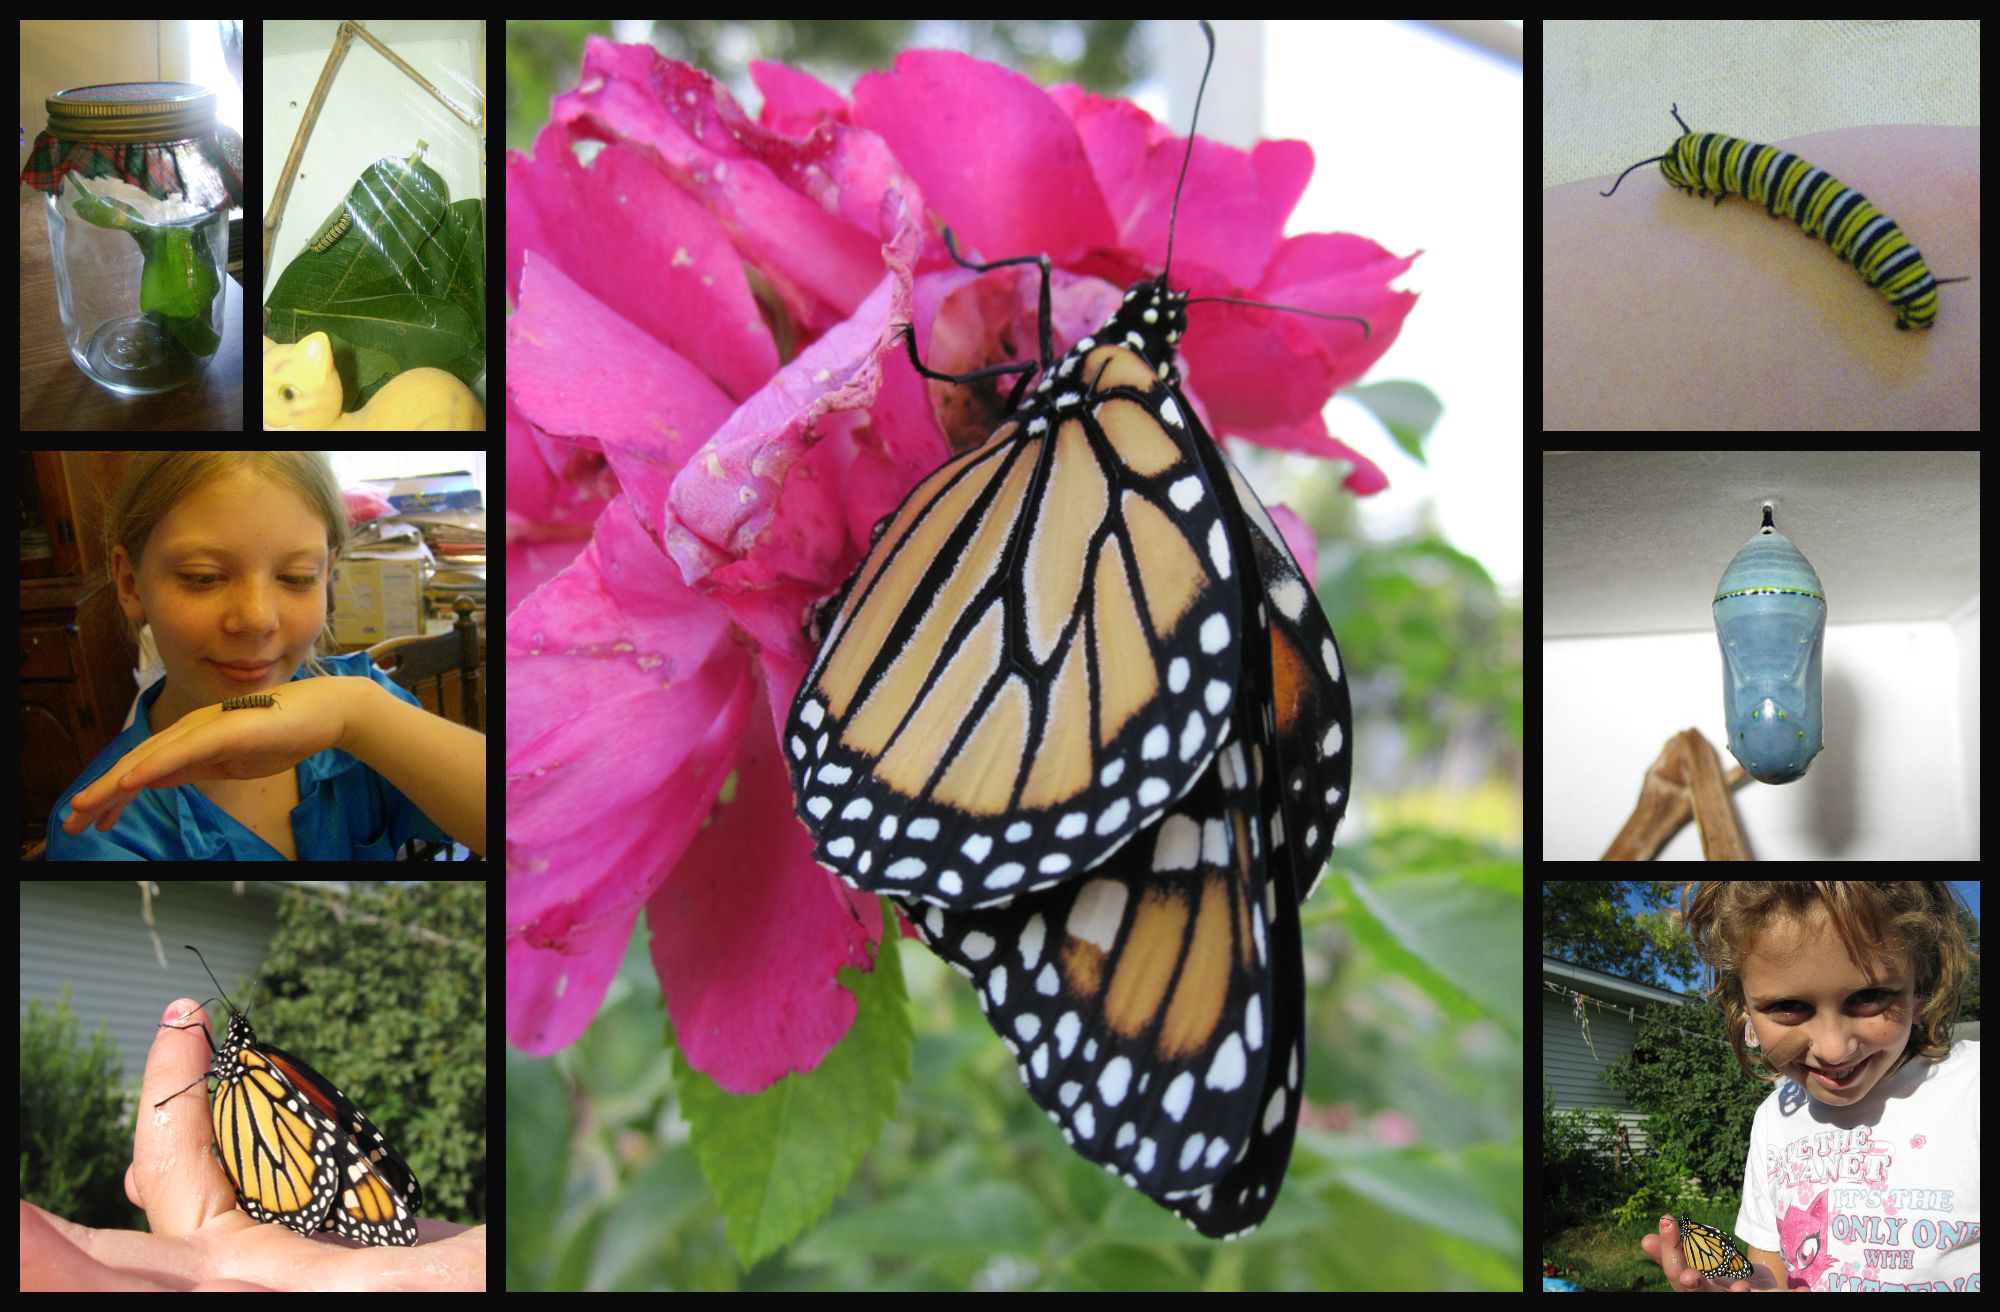 Naturally raising monarch butterflies in your homeschool